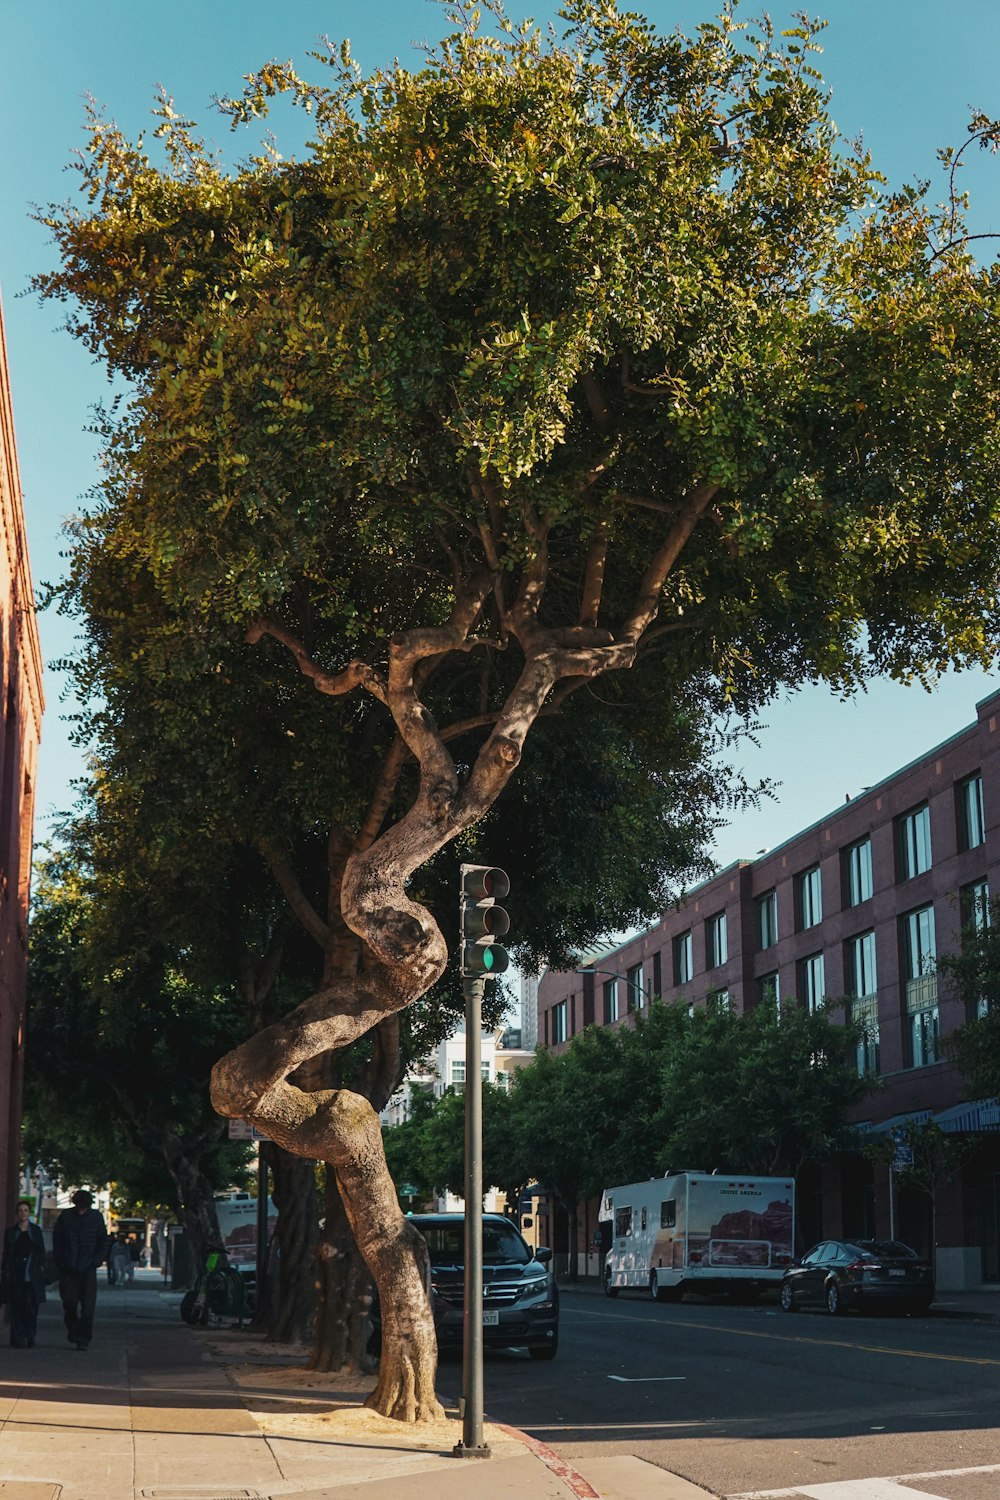 a large tree on a city street corner